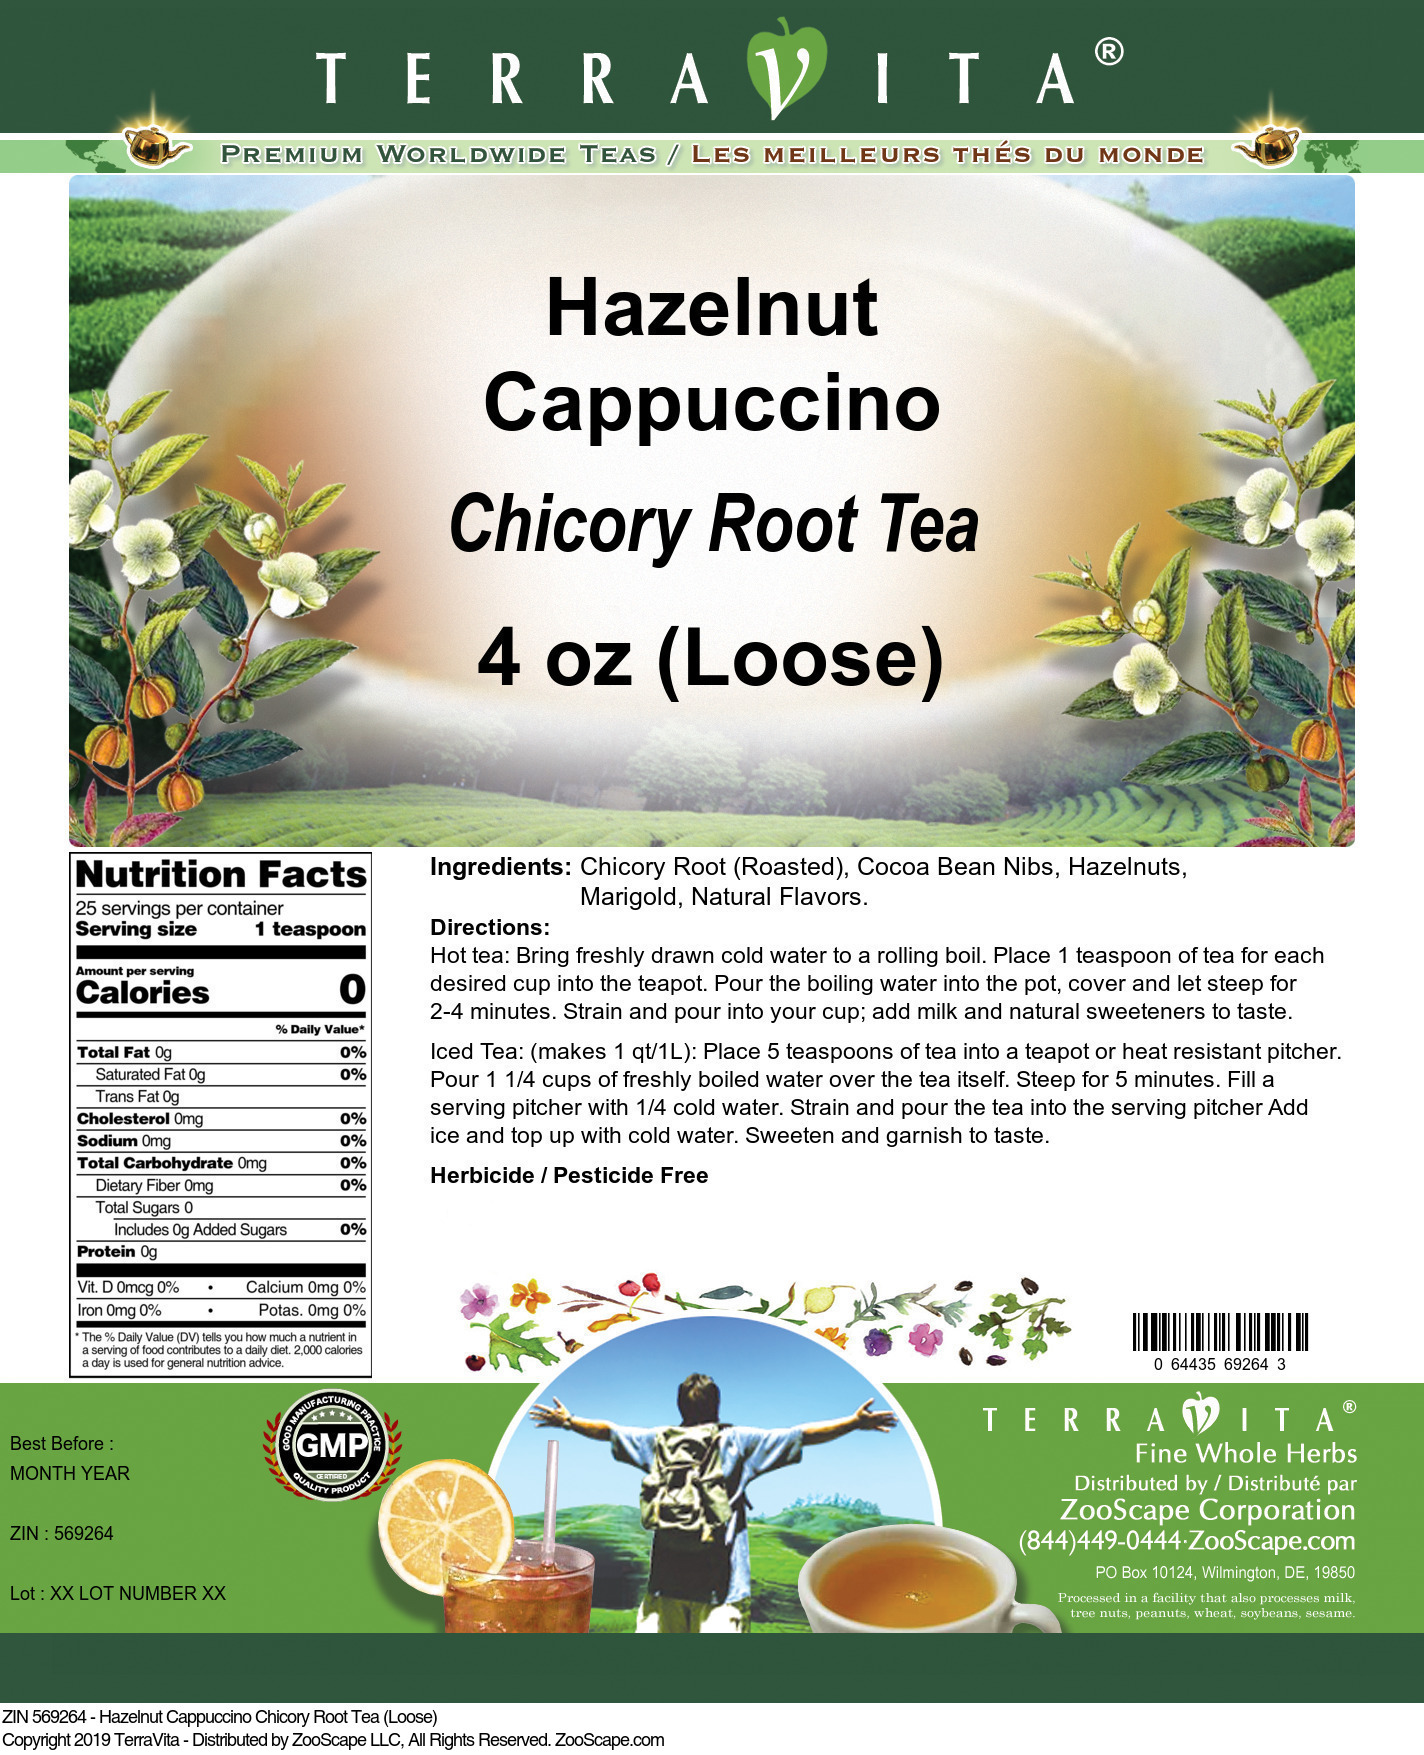 Hazelnut Cappuccino Chicory Root Tea (Loose) - Label